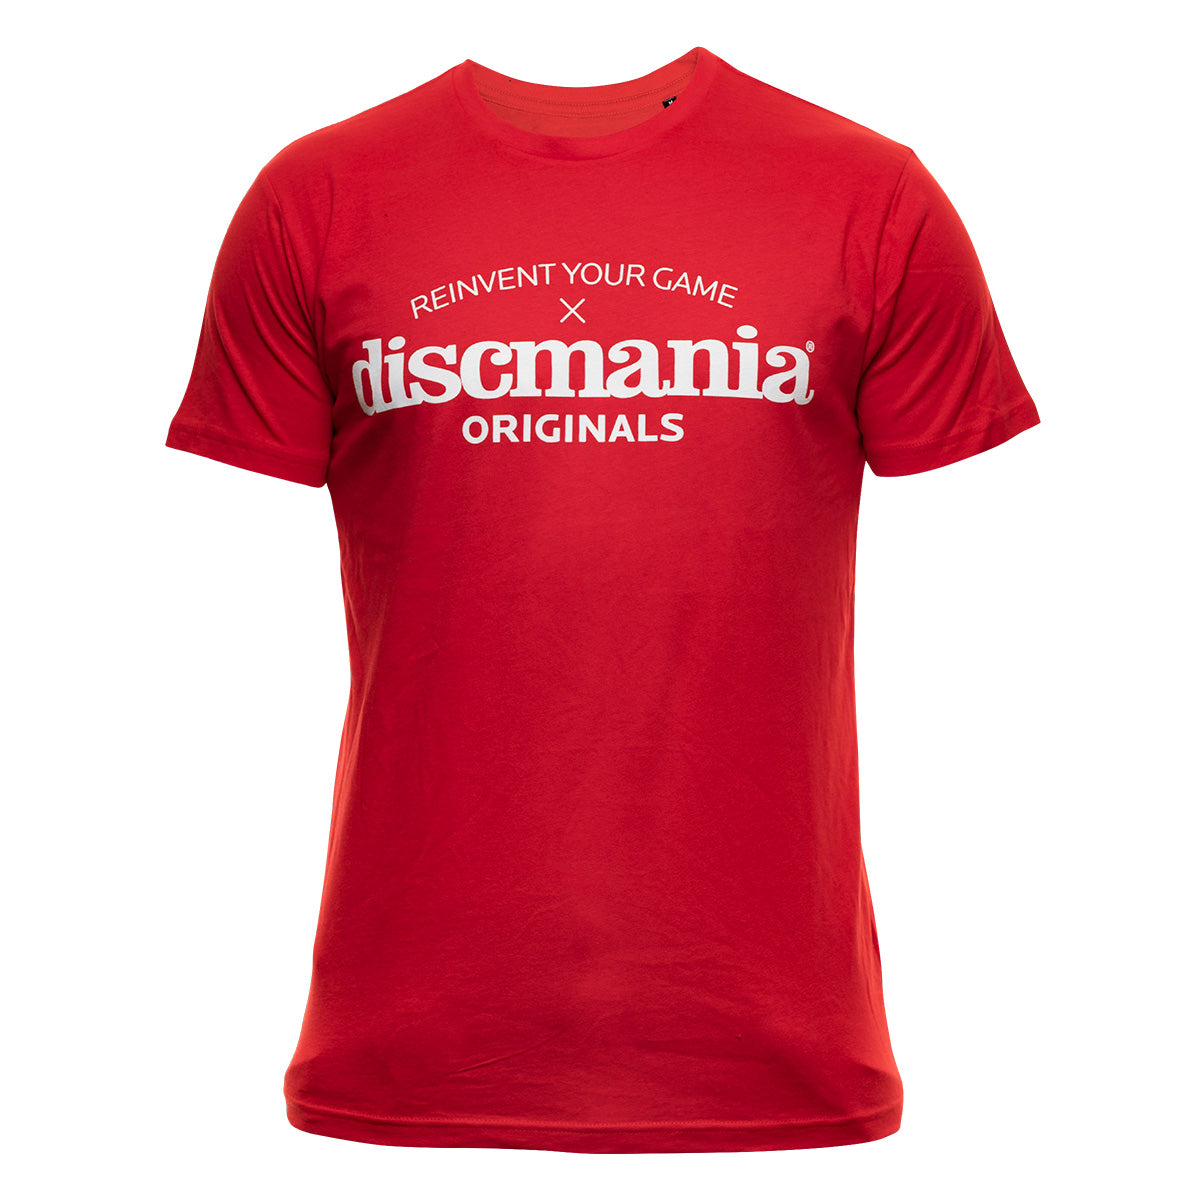 Discmania Originals Tee Shirt - Red